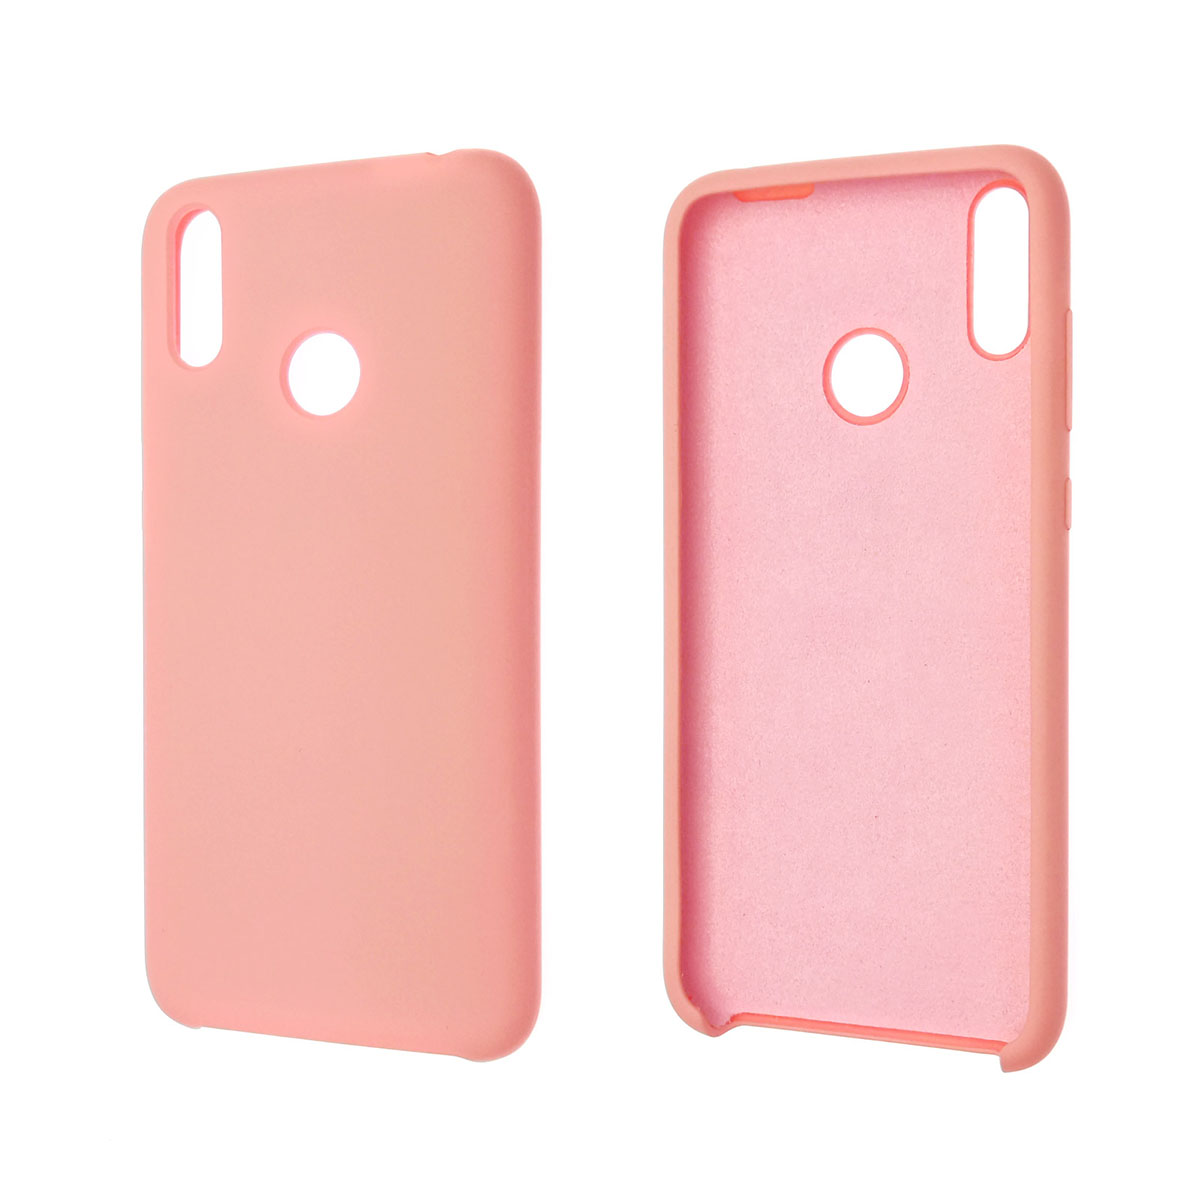 Чехол накладка Silicon Cover для HUAWEI Honor 8C, силикон, бархат, цвет светло розовый.